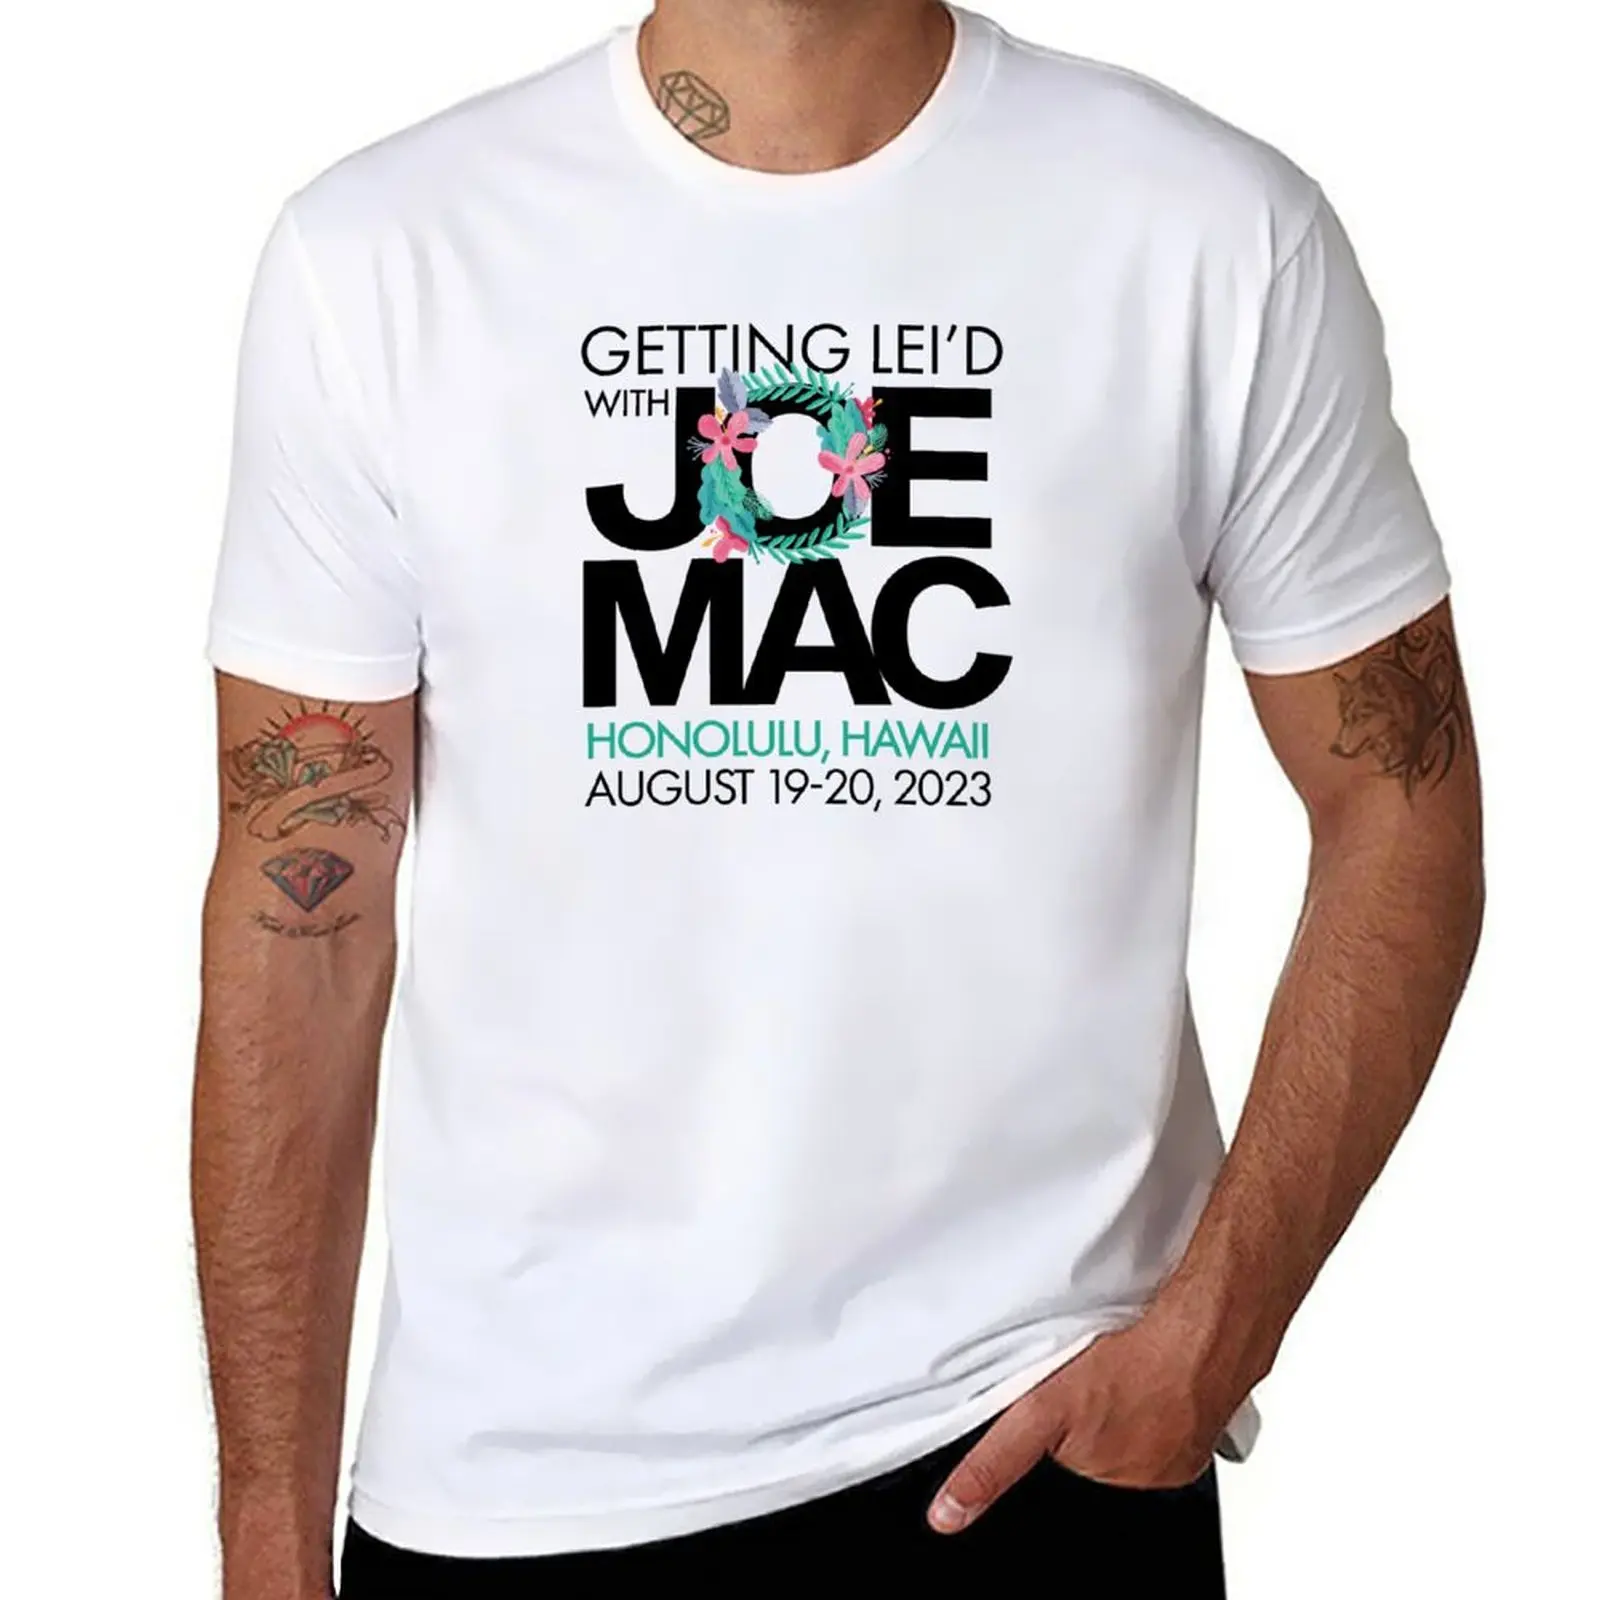 Новые футболки Getting lei'd with Joe Mac Hawaii - Версия Lei'd, футболки с графическими принтами, футболки для мужчин, упаковка